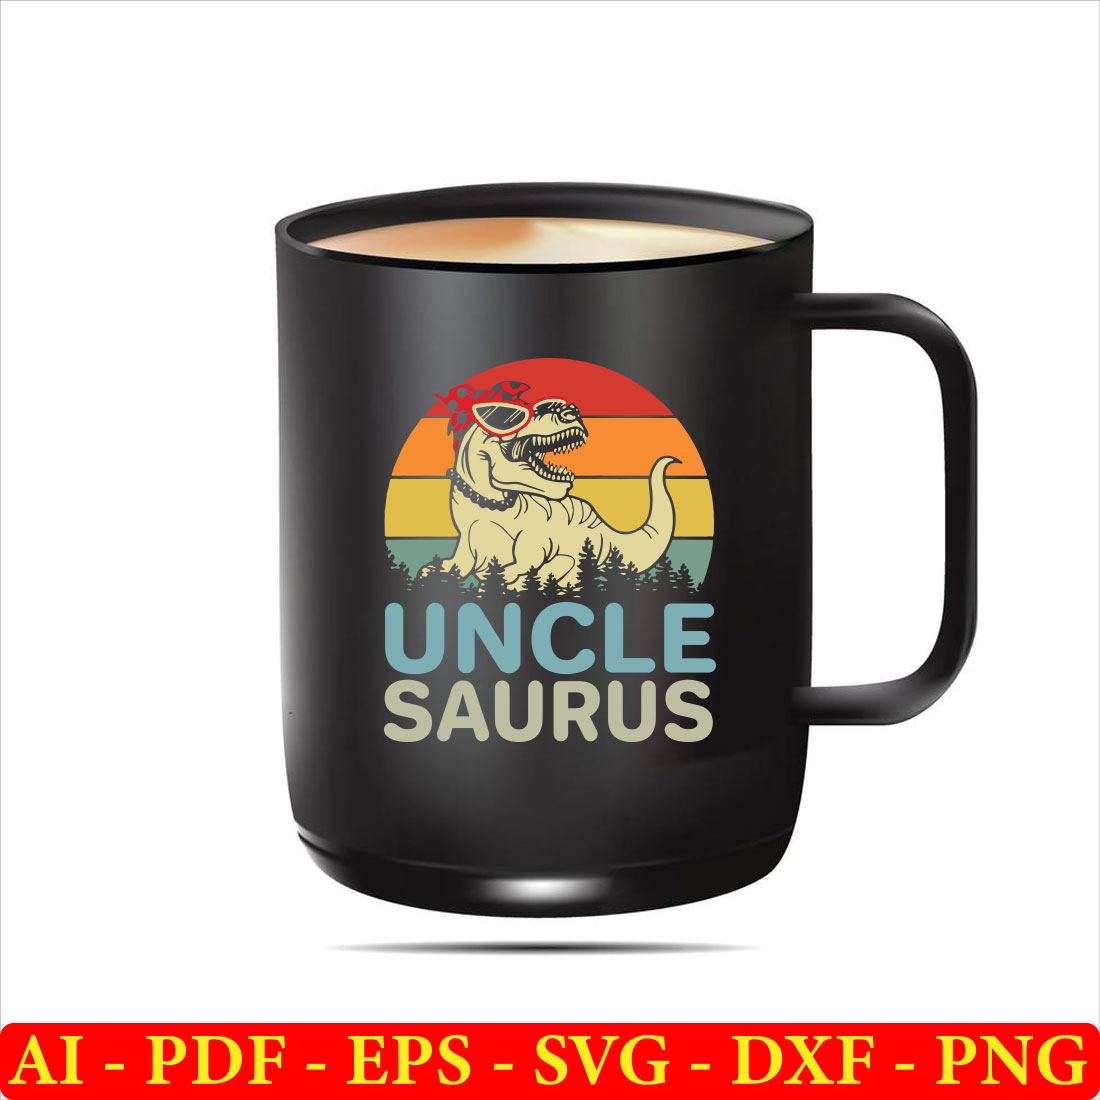 Black coffee mug with an image of a dinosaur on it.